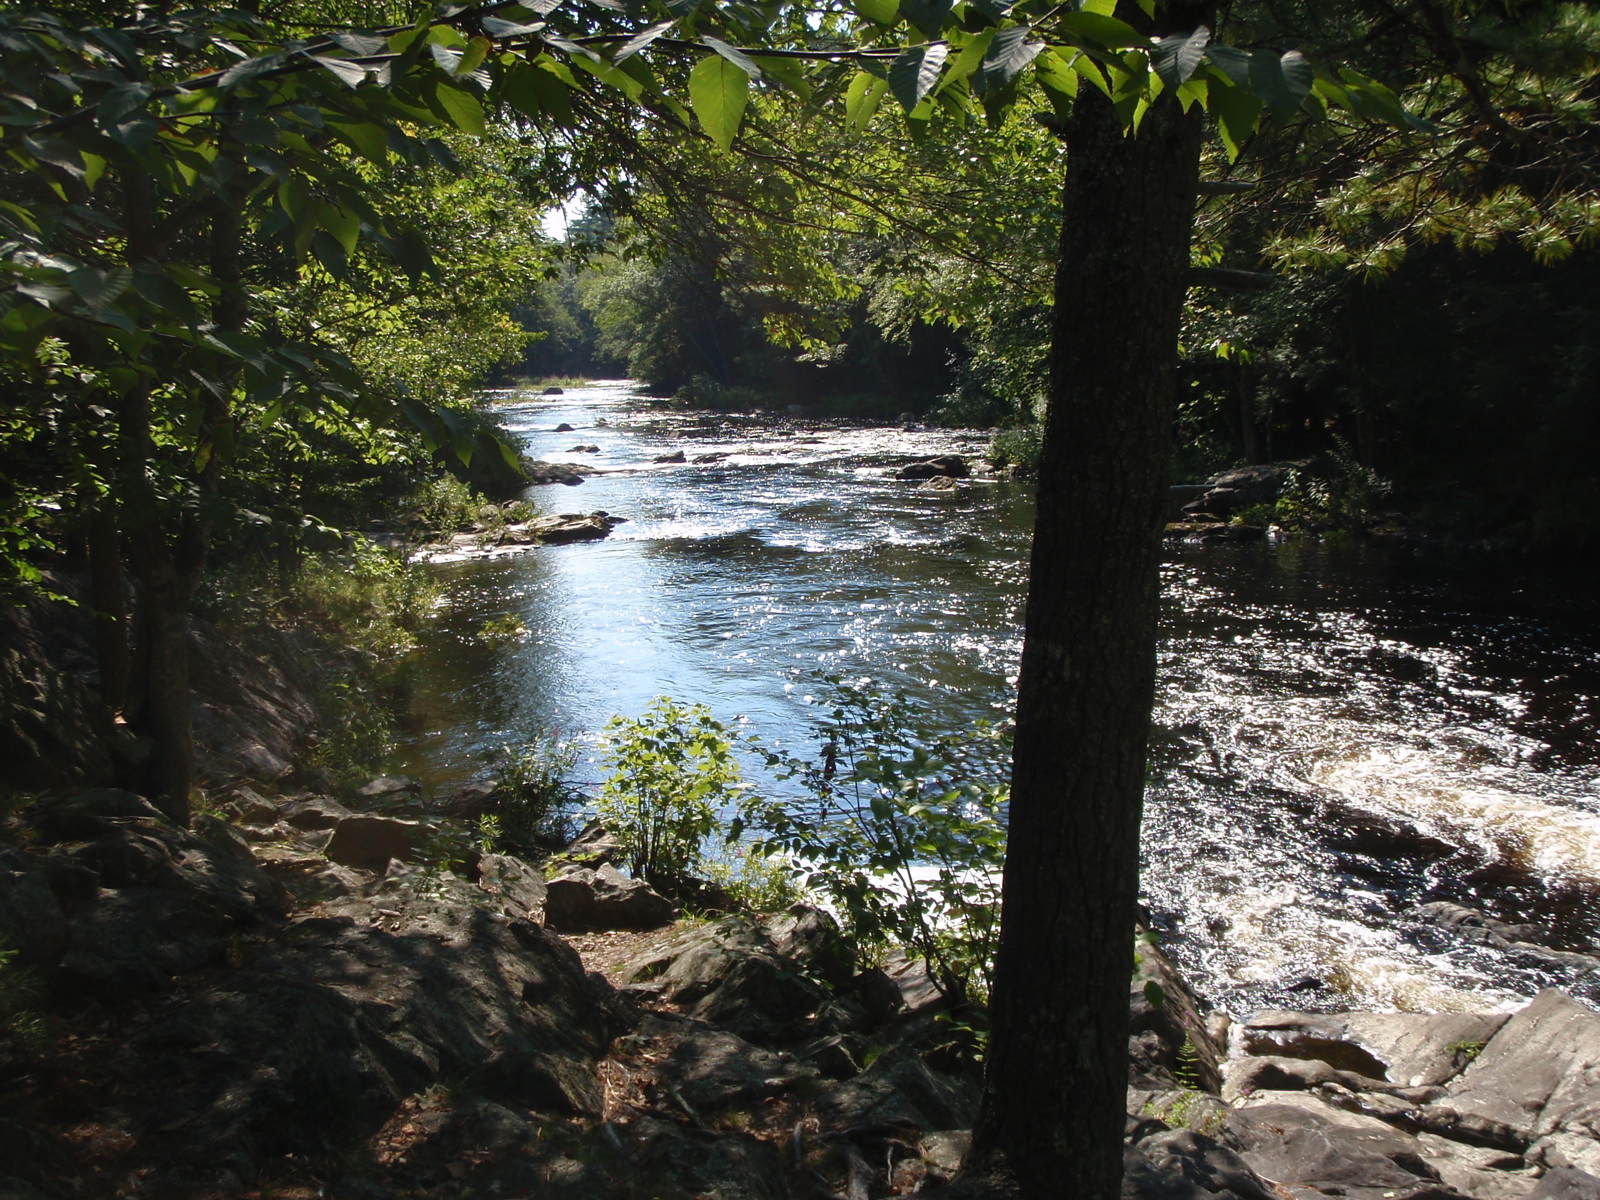 the Lamprey River flows through a lush forest